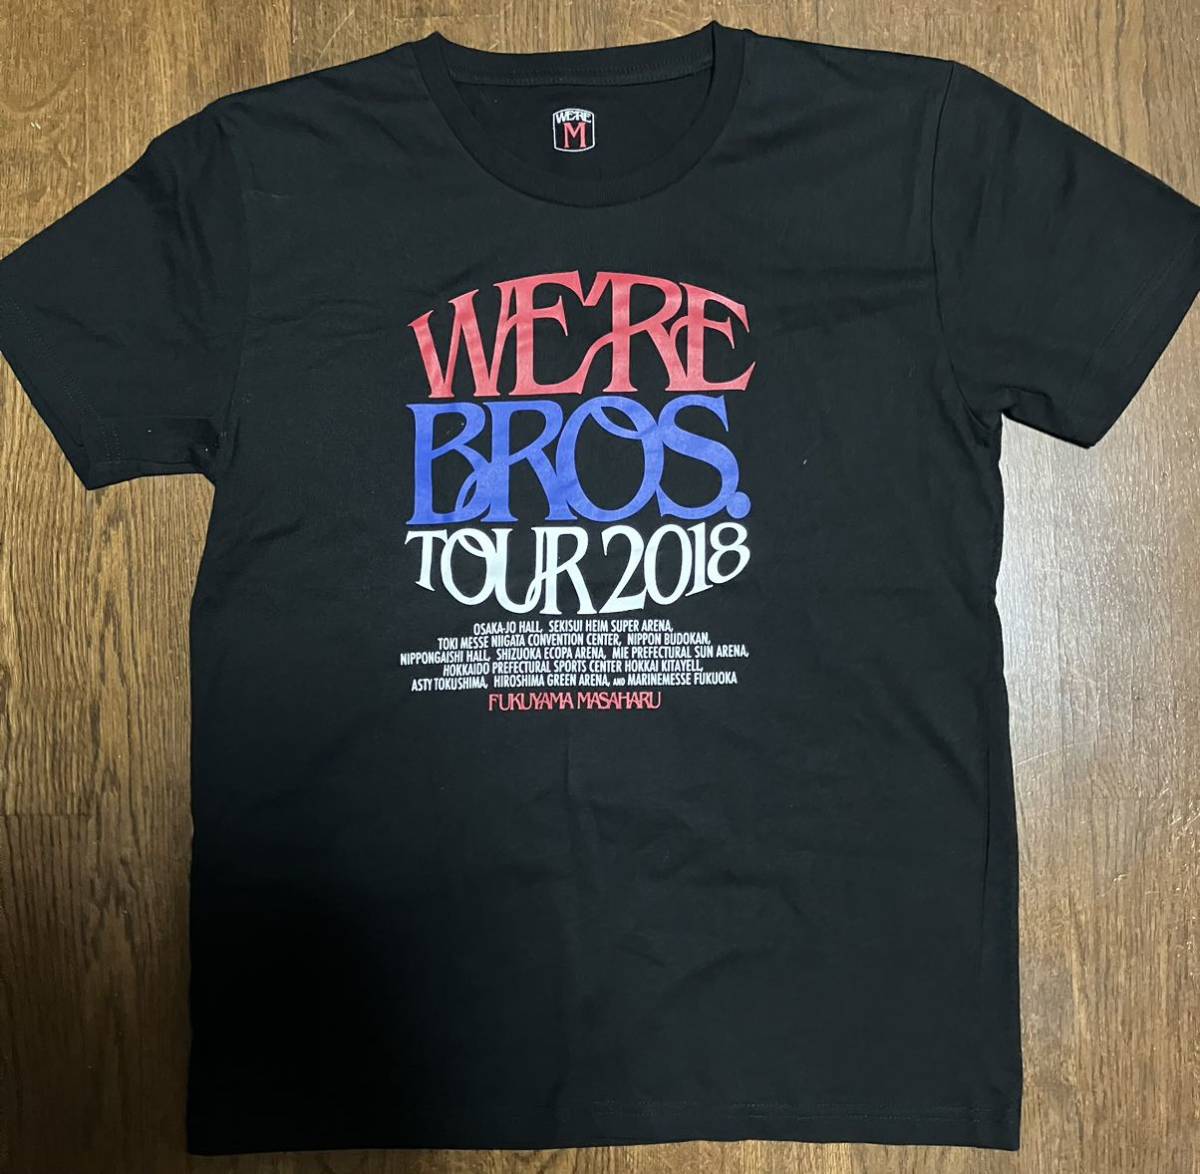 WERE BROS TOUR 2018 福山雅治 半袖Tシャツ Mサイズの画像1